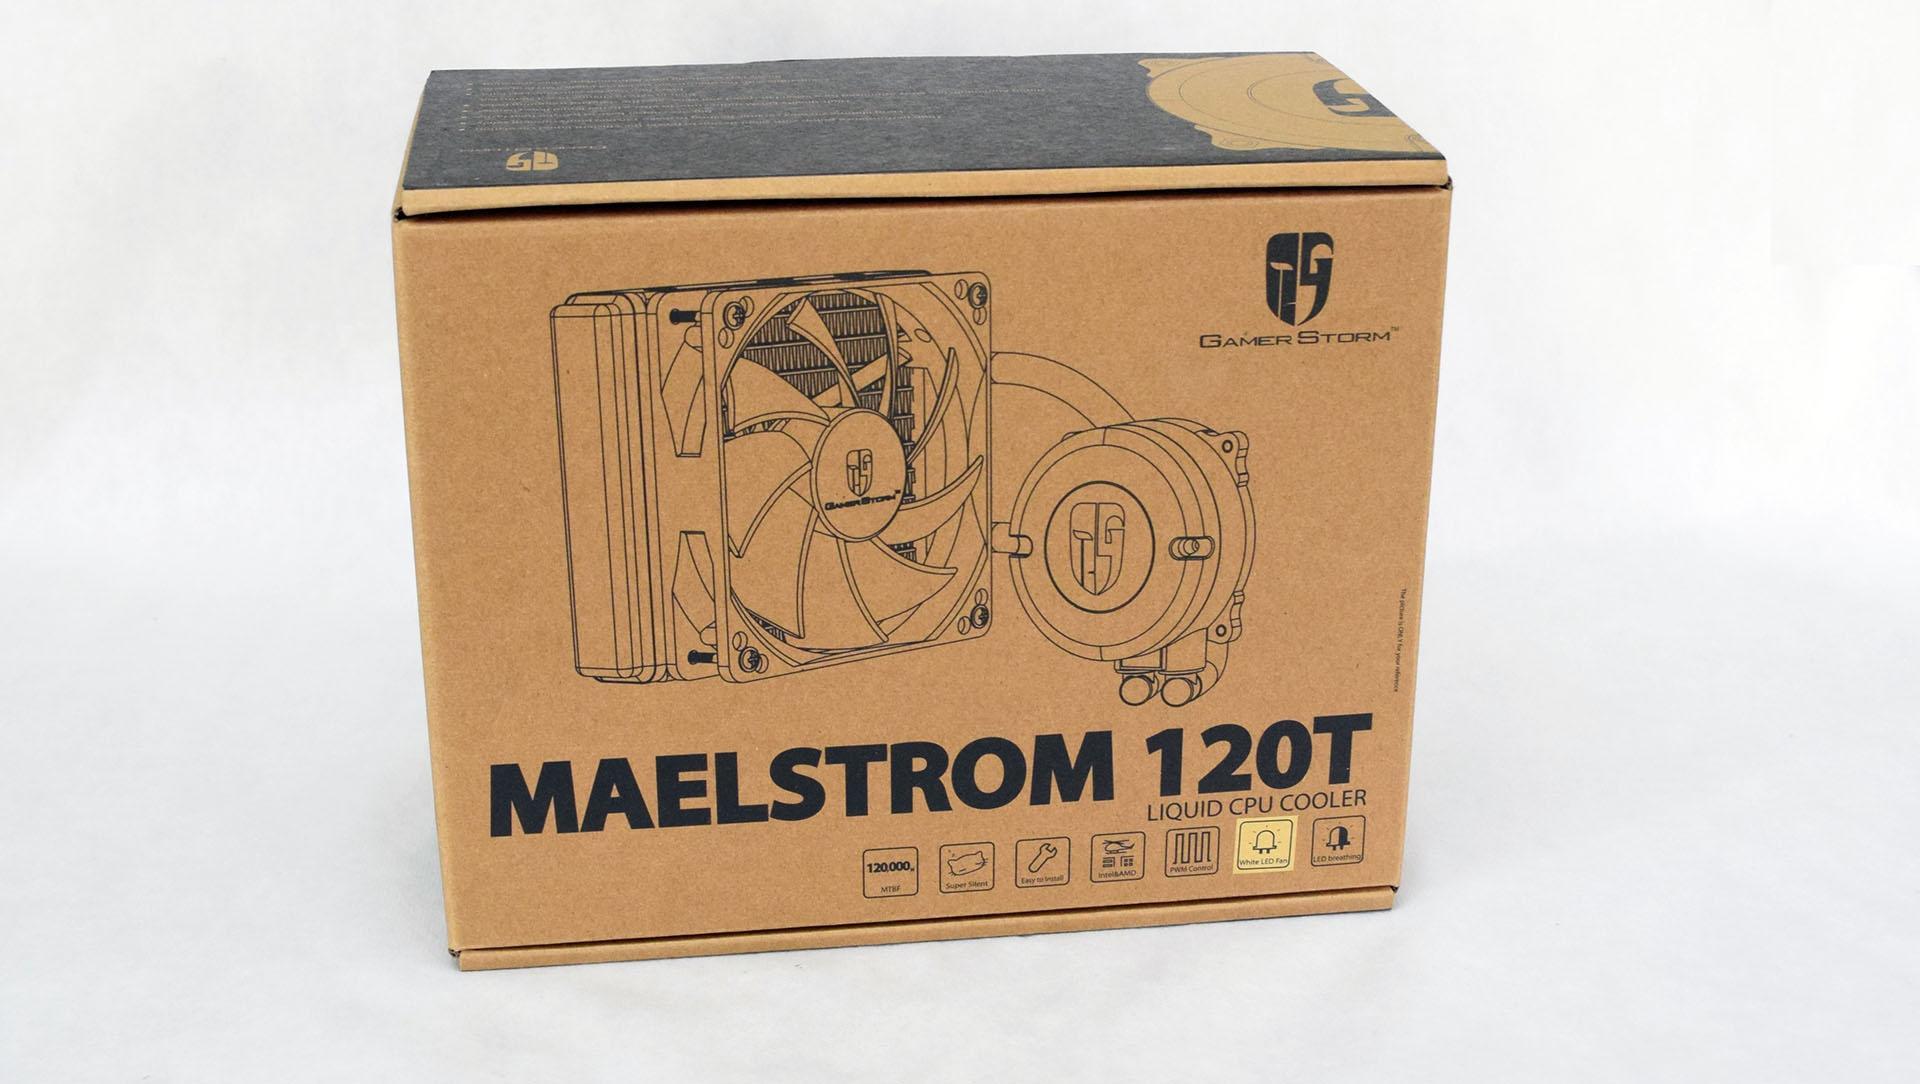 Teste do cooler GamerStorm MAELSTROM 120T